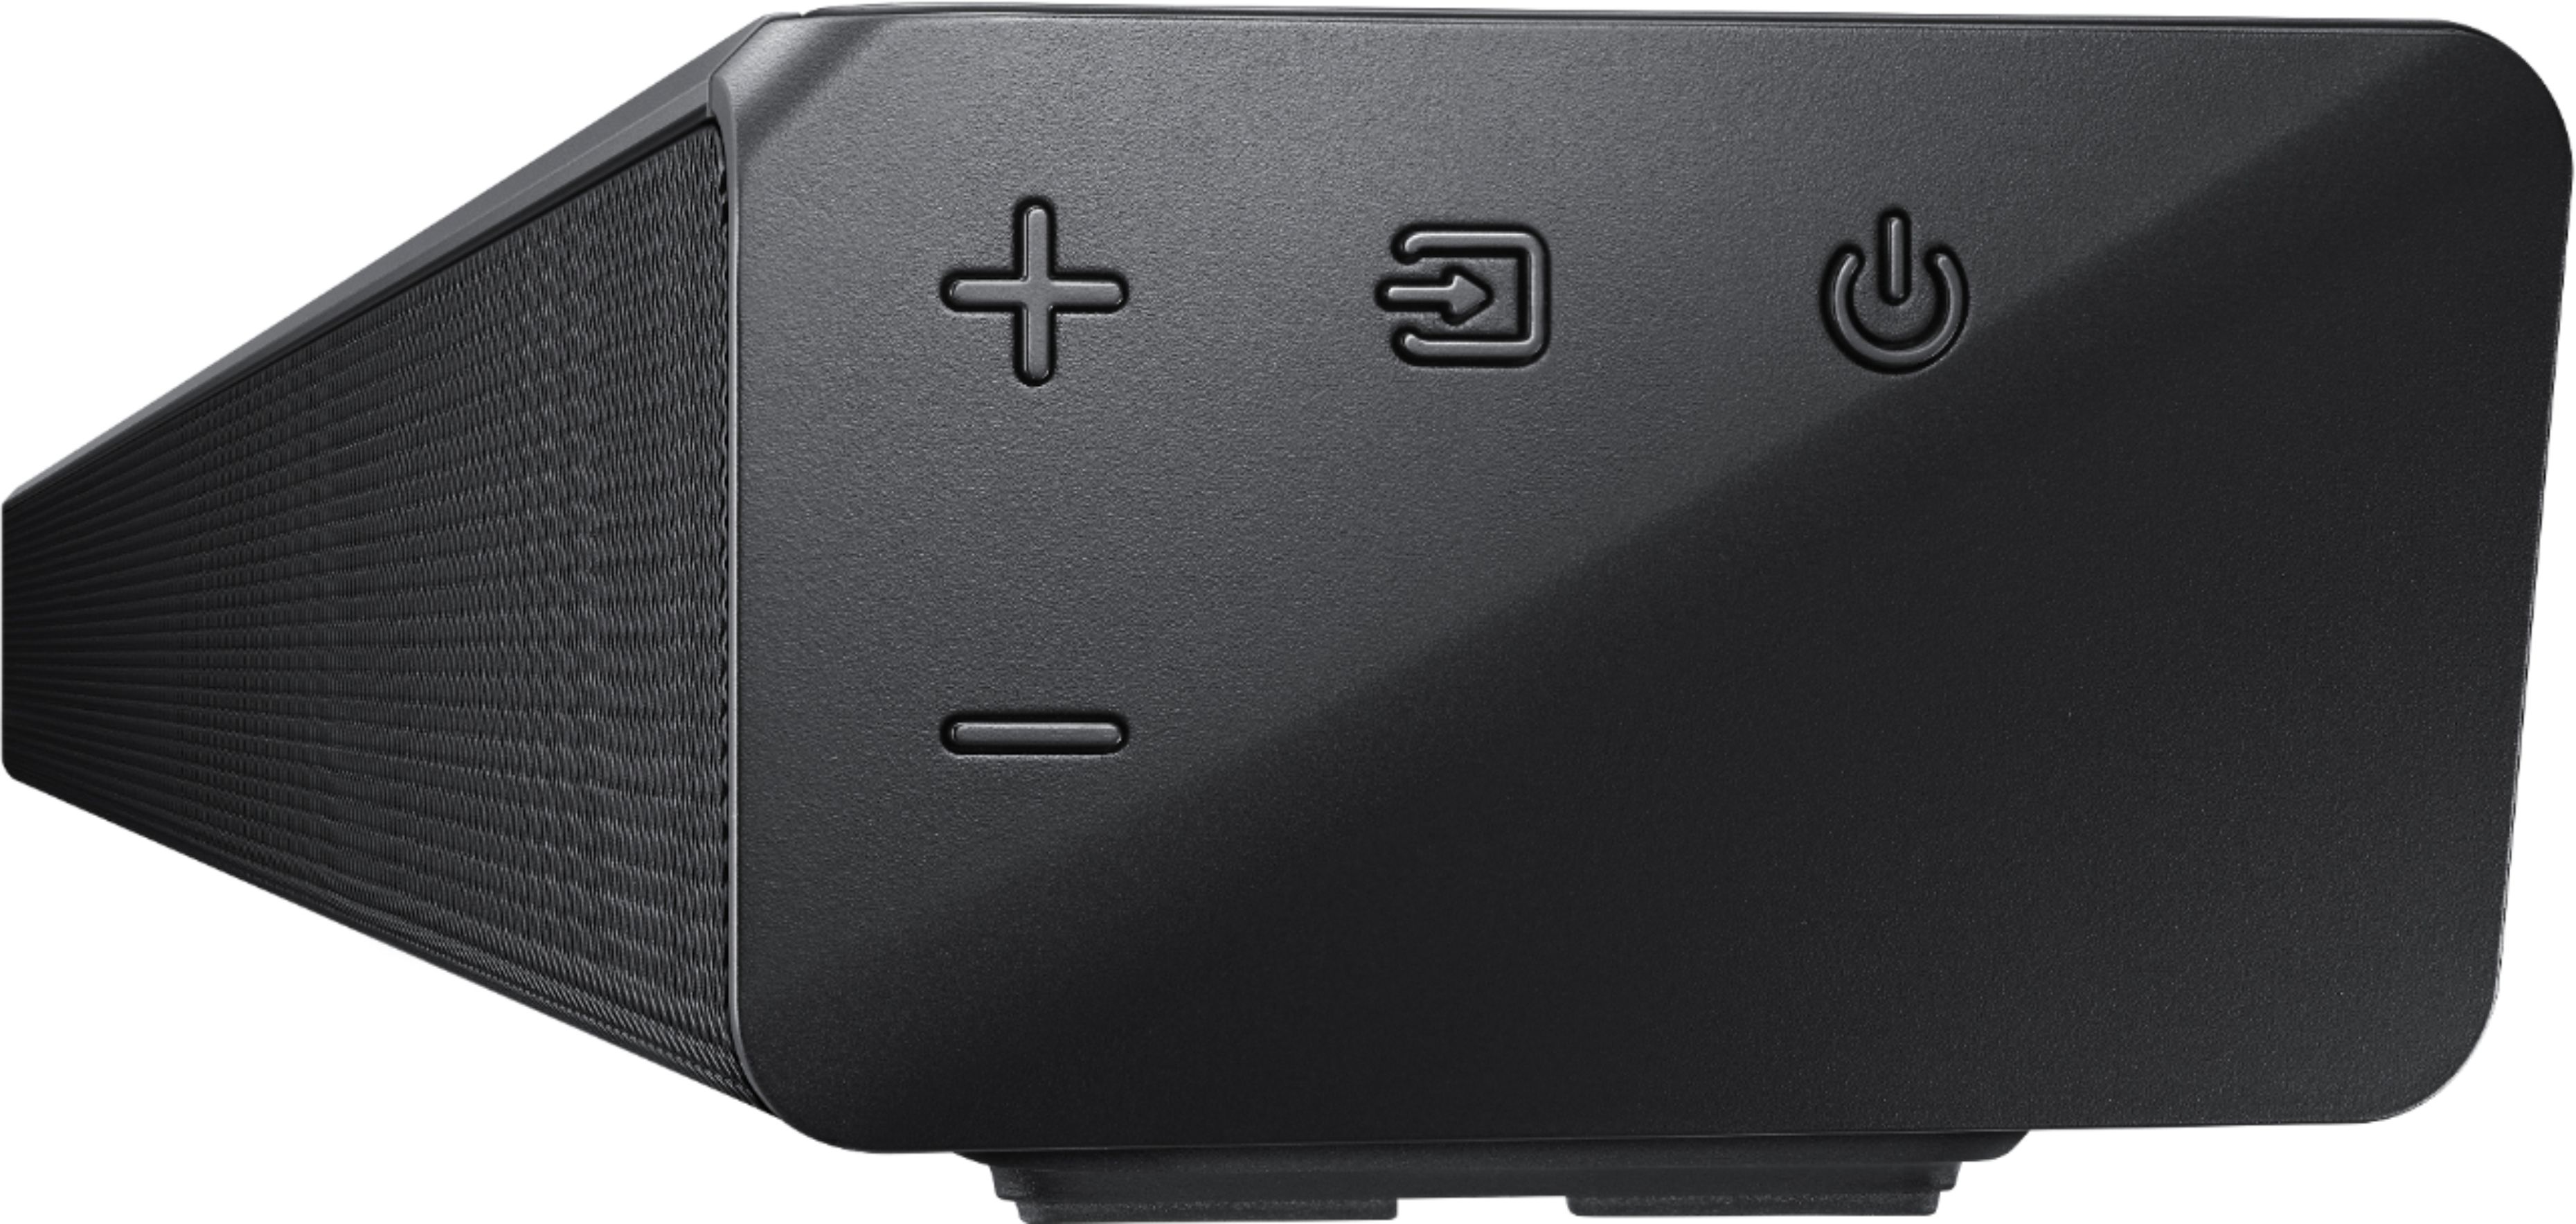 Buy: Samsung 3.1-Channel 340W Soundbar System with 6-1/2" Wireless Subwoofer Charcoal HW-R650/ZA